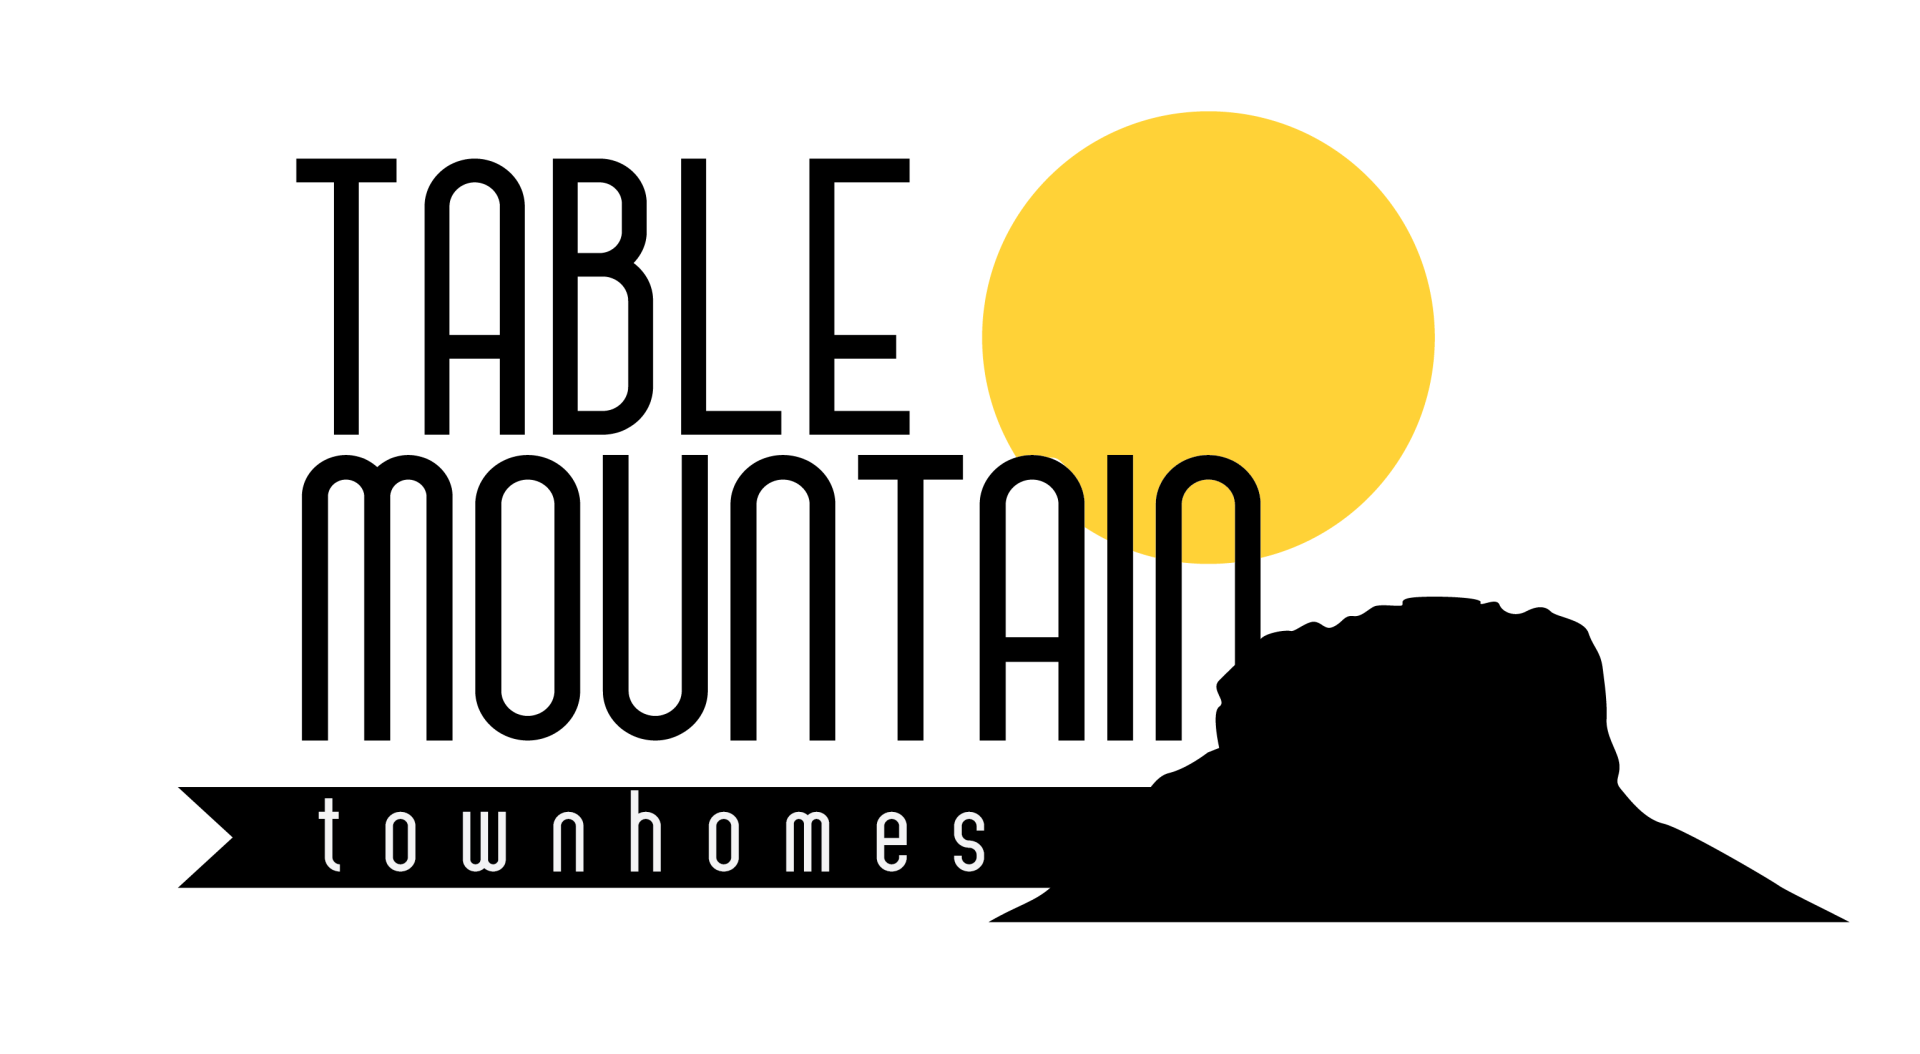 Table mountain townhomes logo